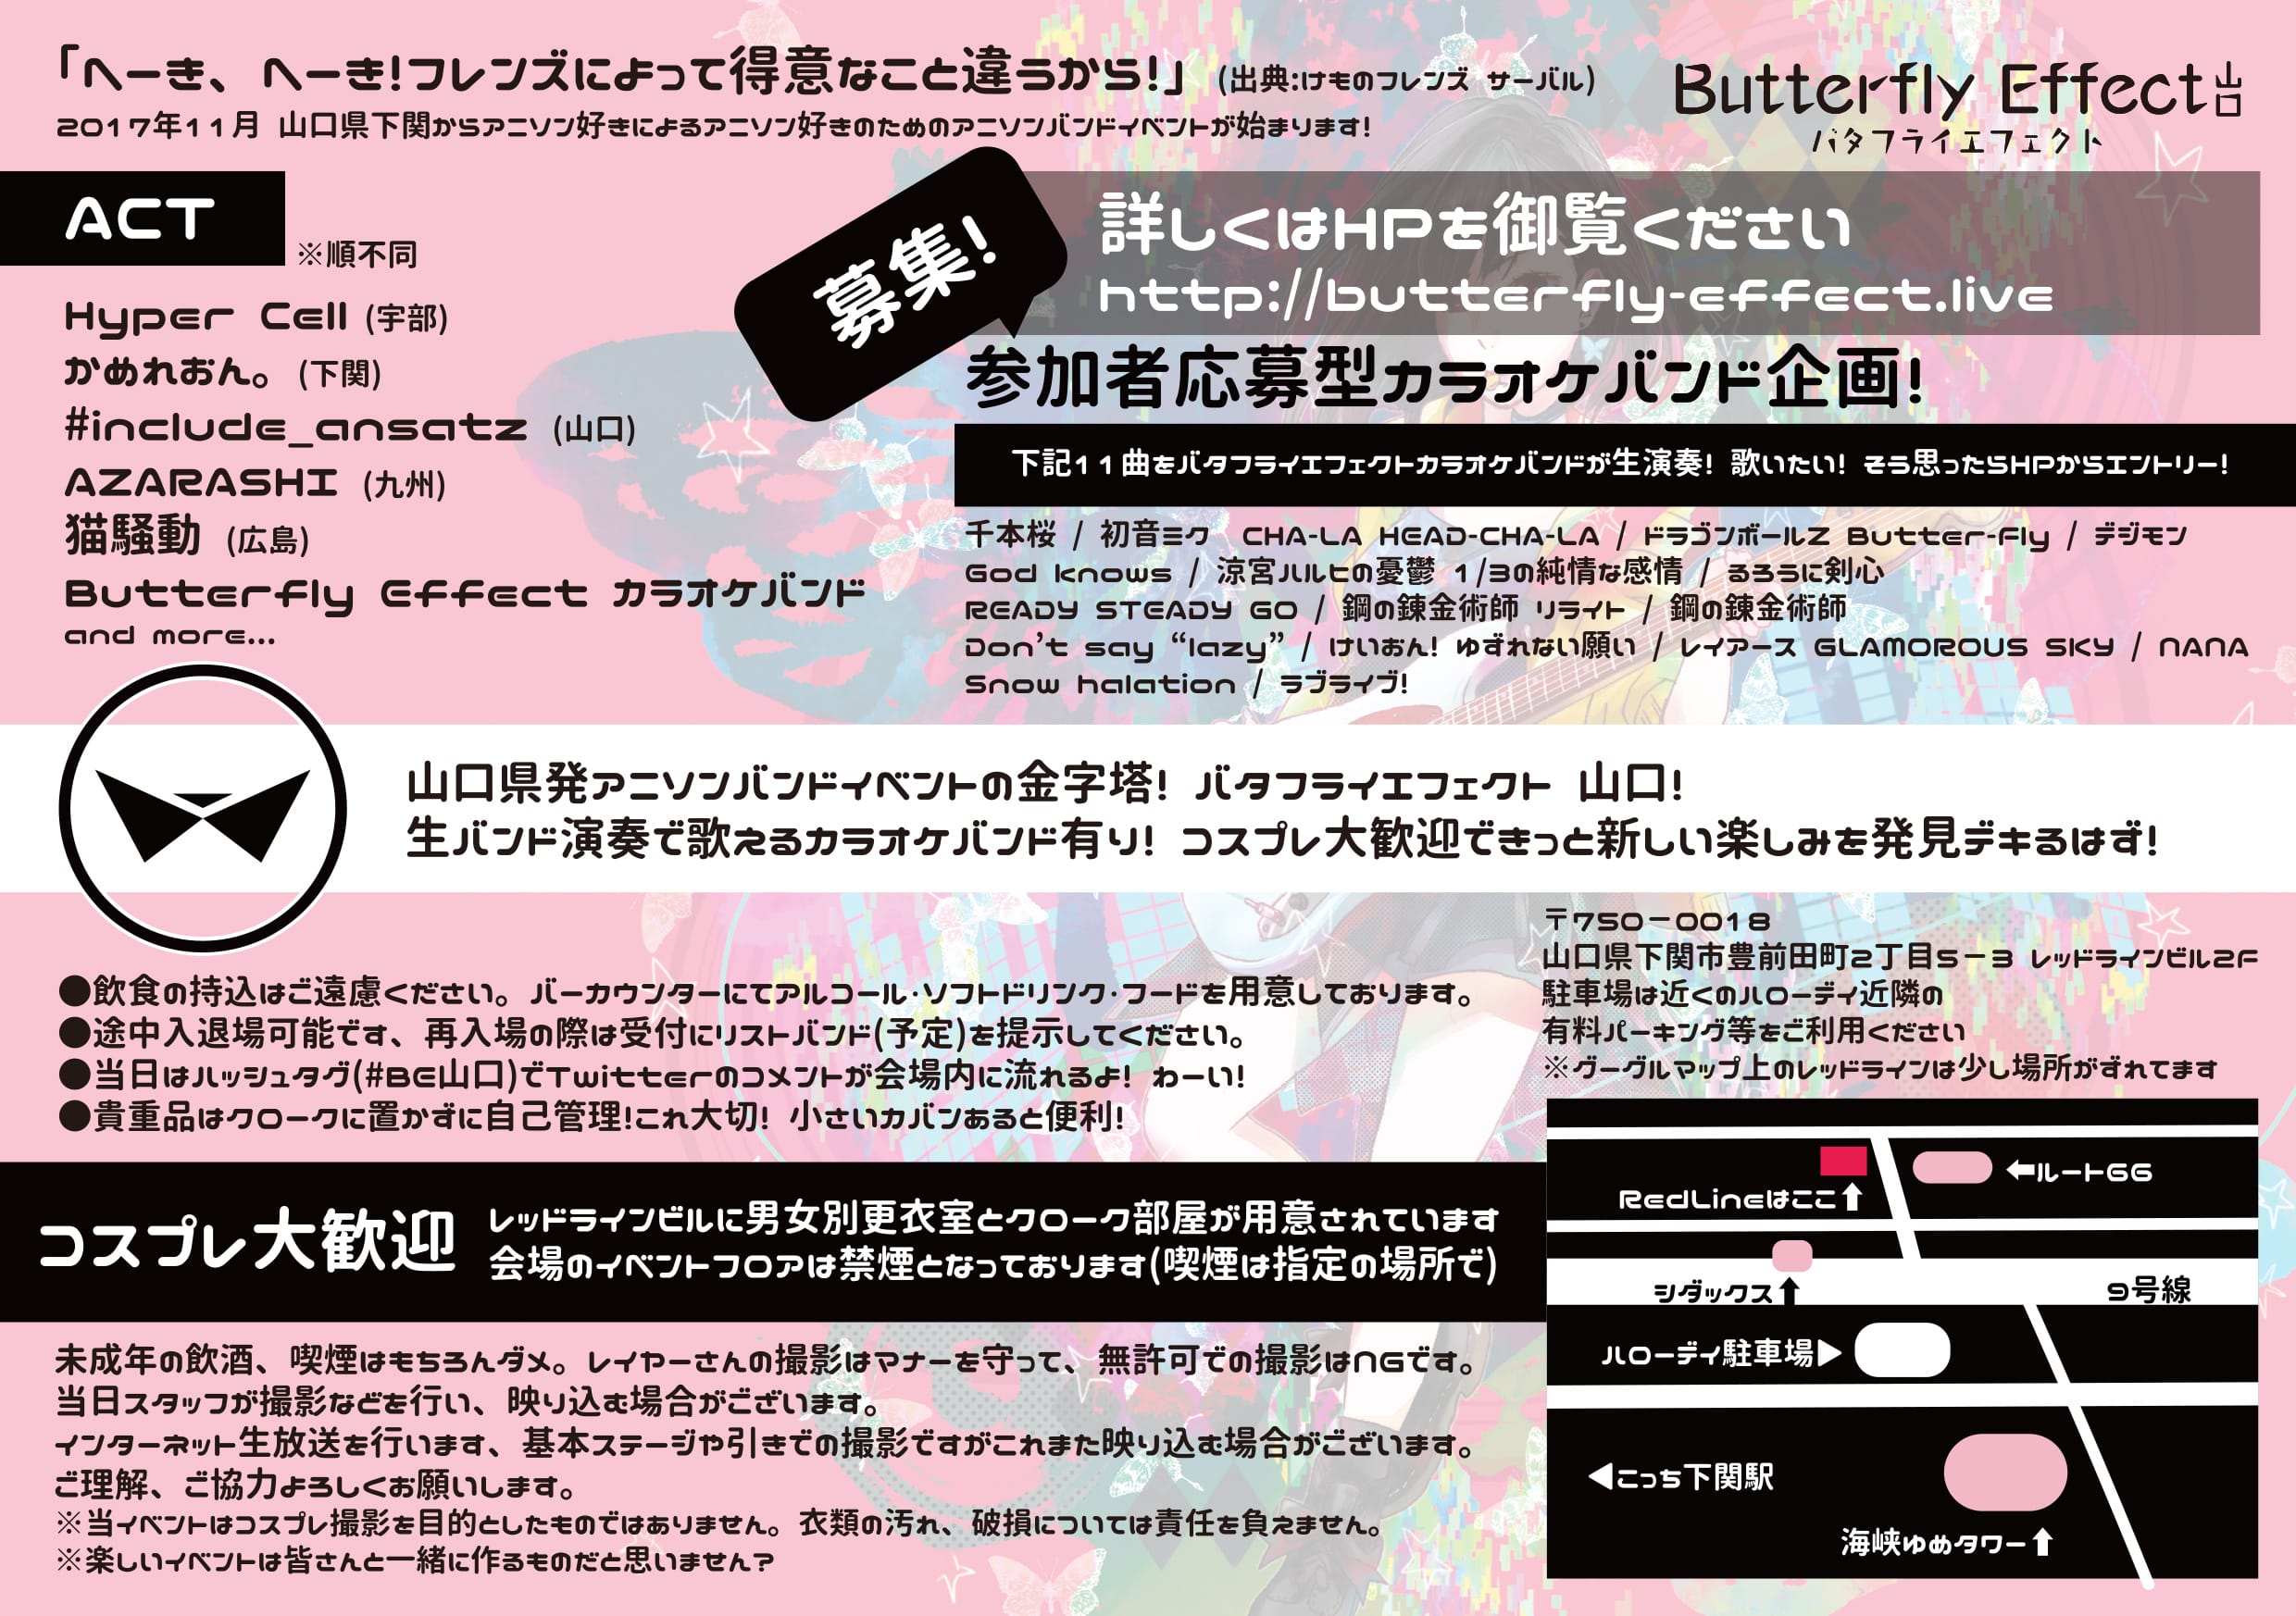 Butterfly Effect 山口 Vol.1フライヤー うら